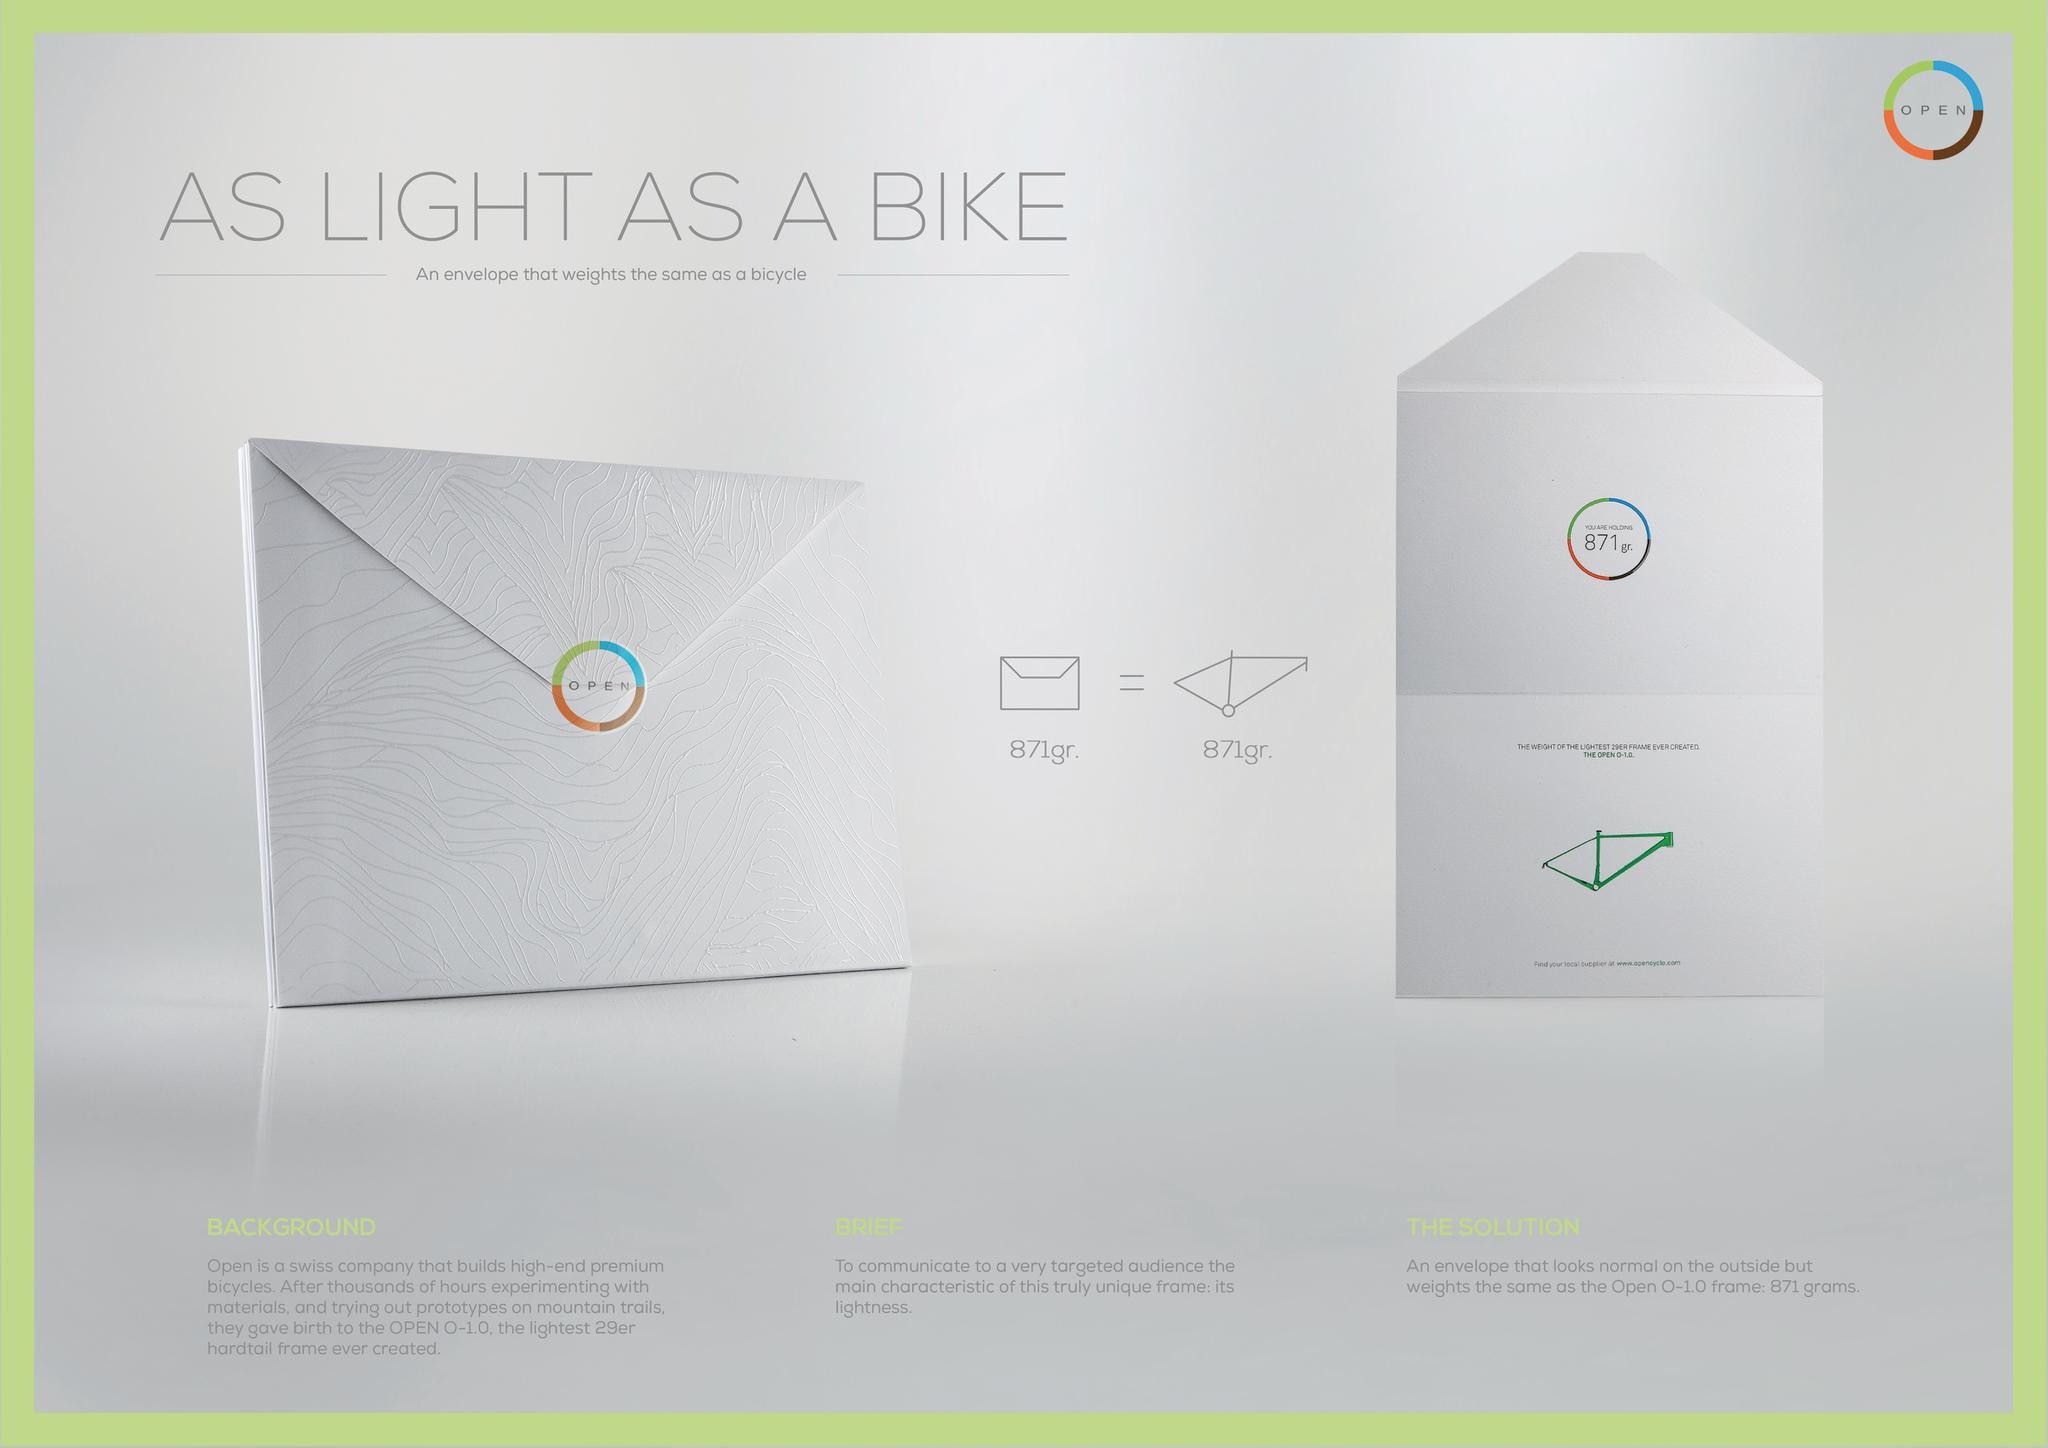 As light as a bike